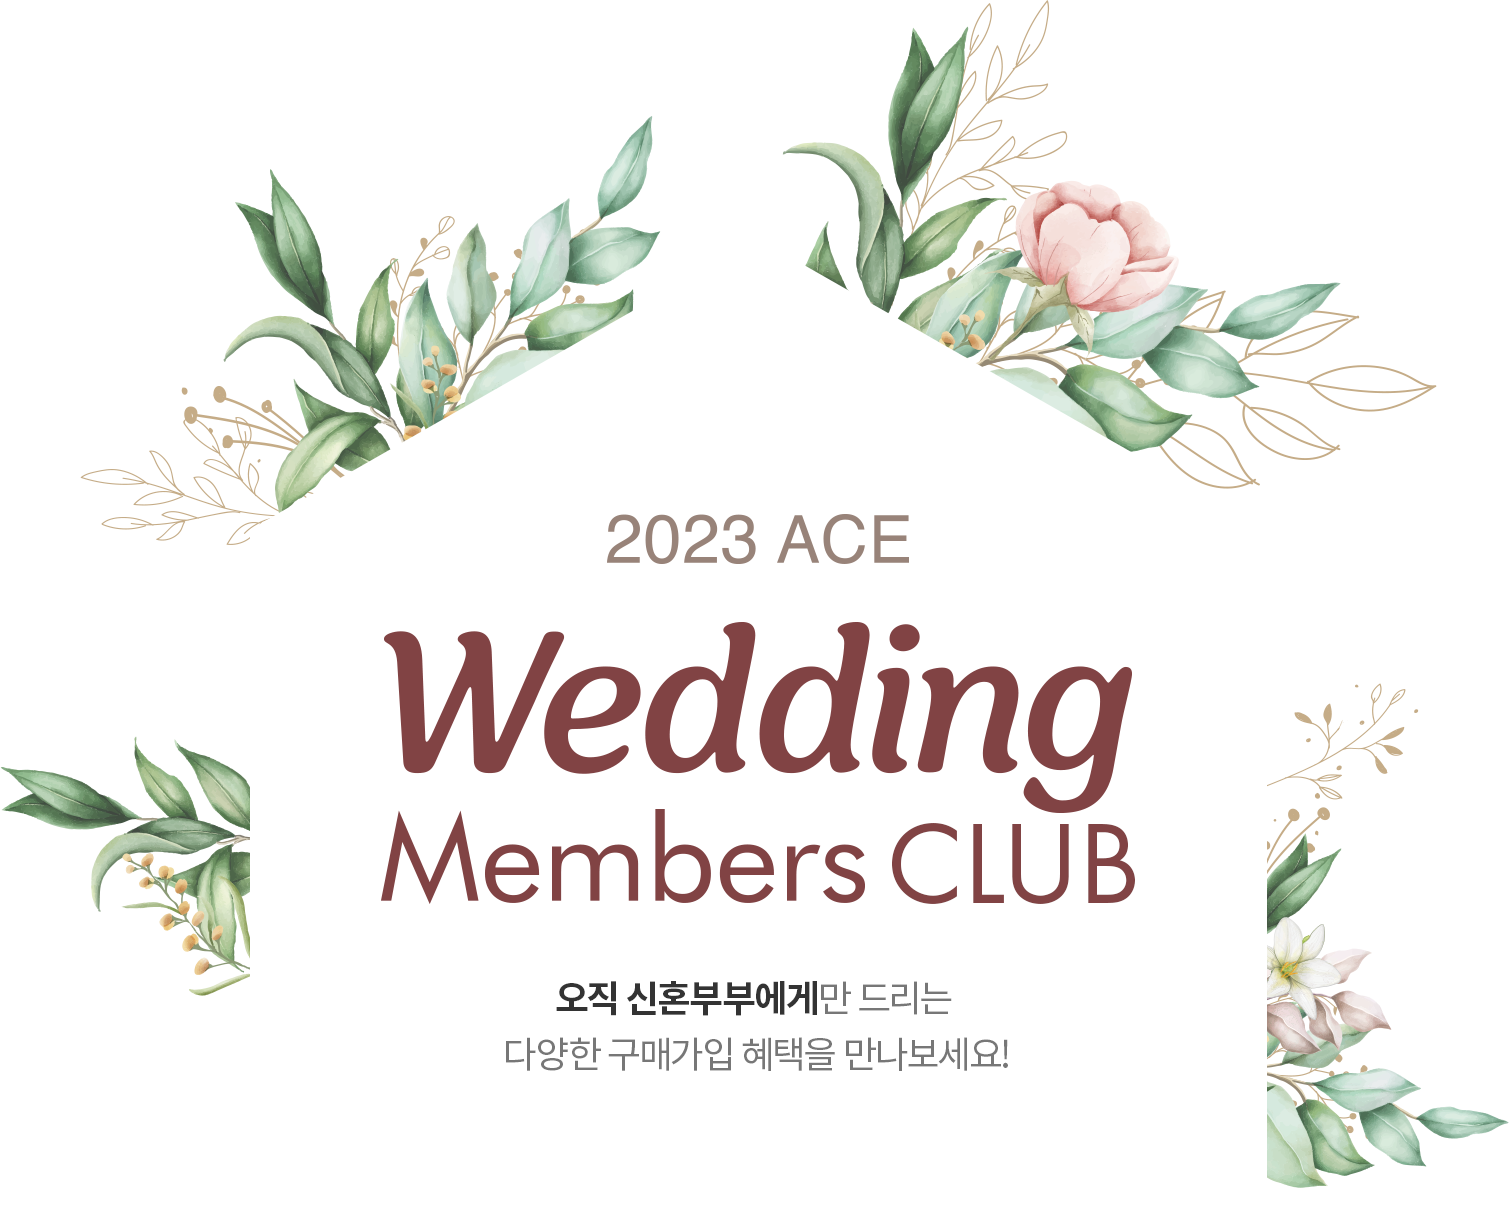 2023 ACE Wedding Members CLUB 오직 신혼부부에게만 드리는 다양한 구매가입 혜택을 만나보세요!